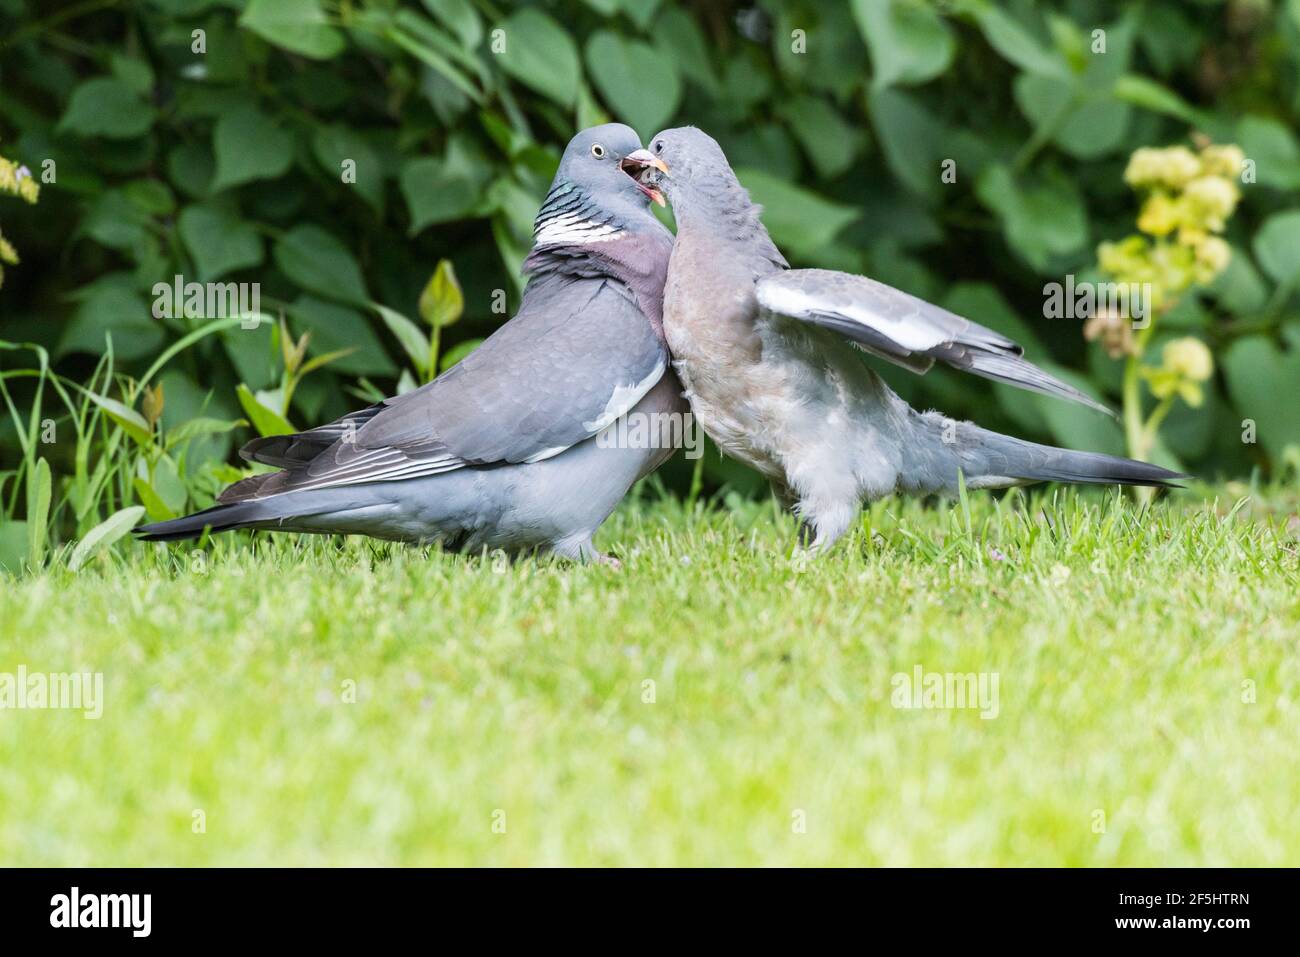 A Woodpigeon (Columba palumbus) feeding its young in the uk Stock Photo